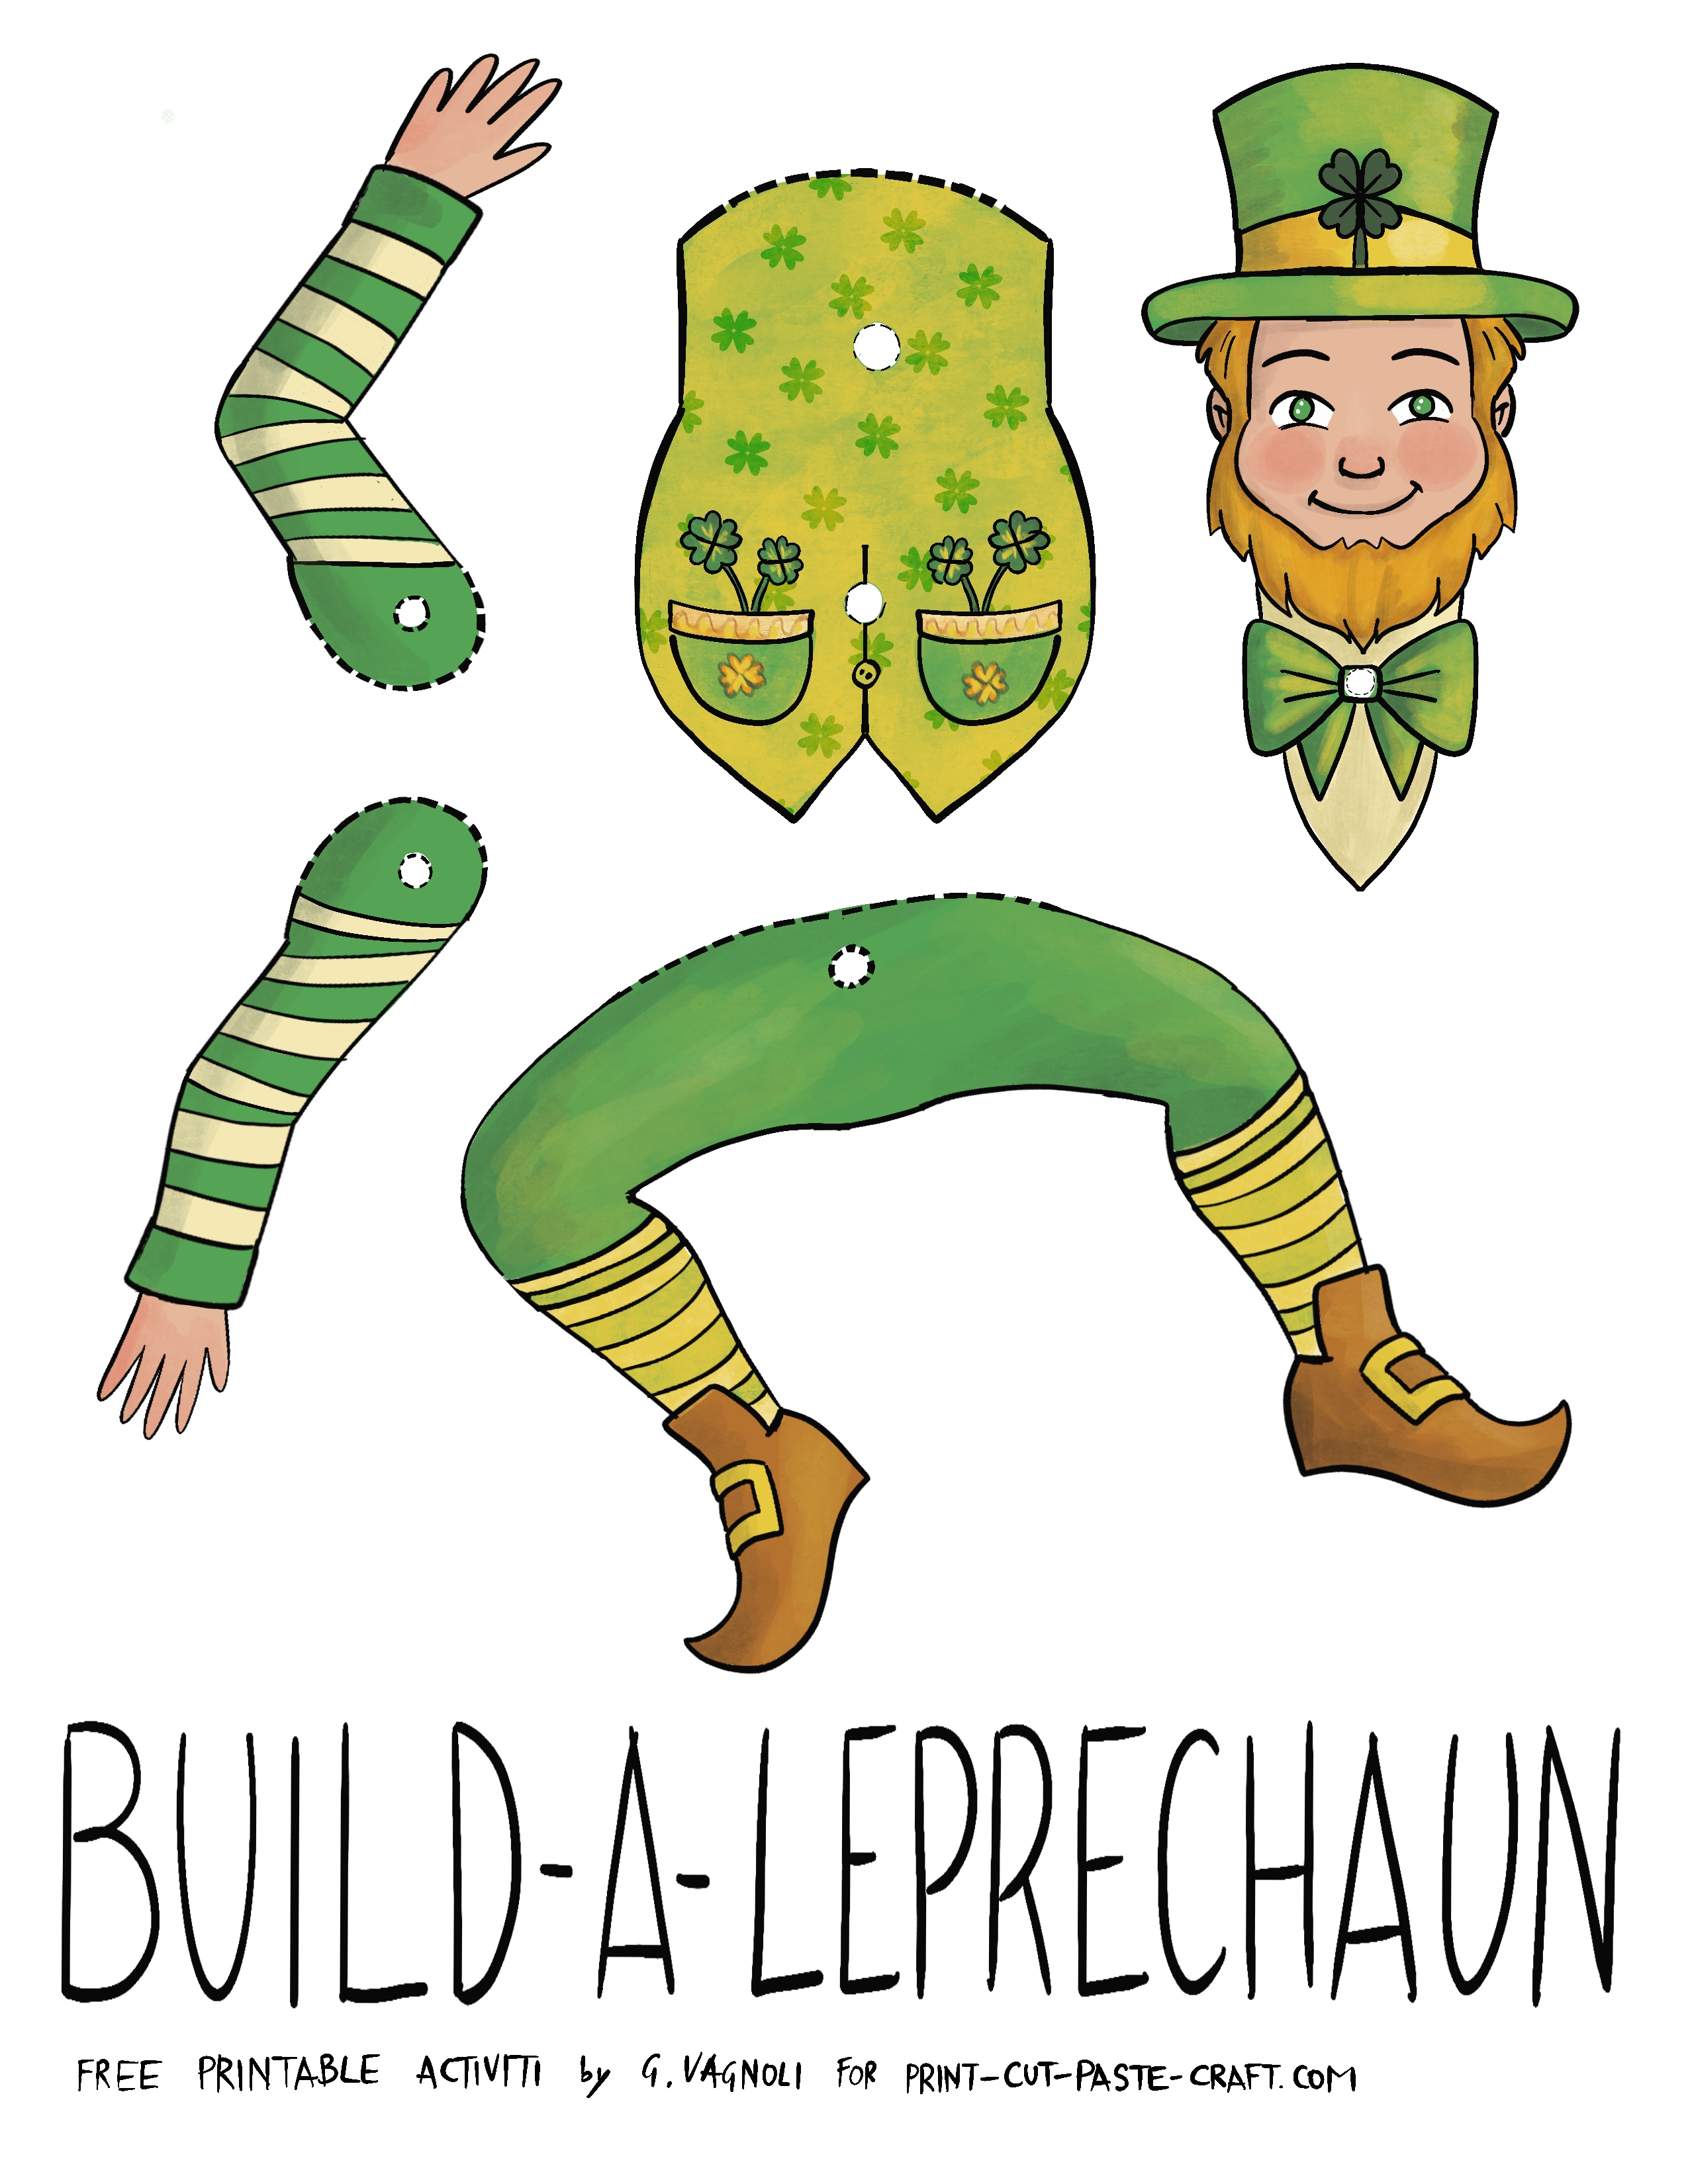 BuildaLeprechaun Free Printable Kids Activity for Saint Patrick’s Day